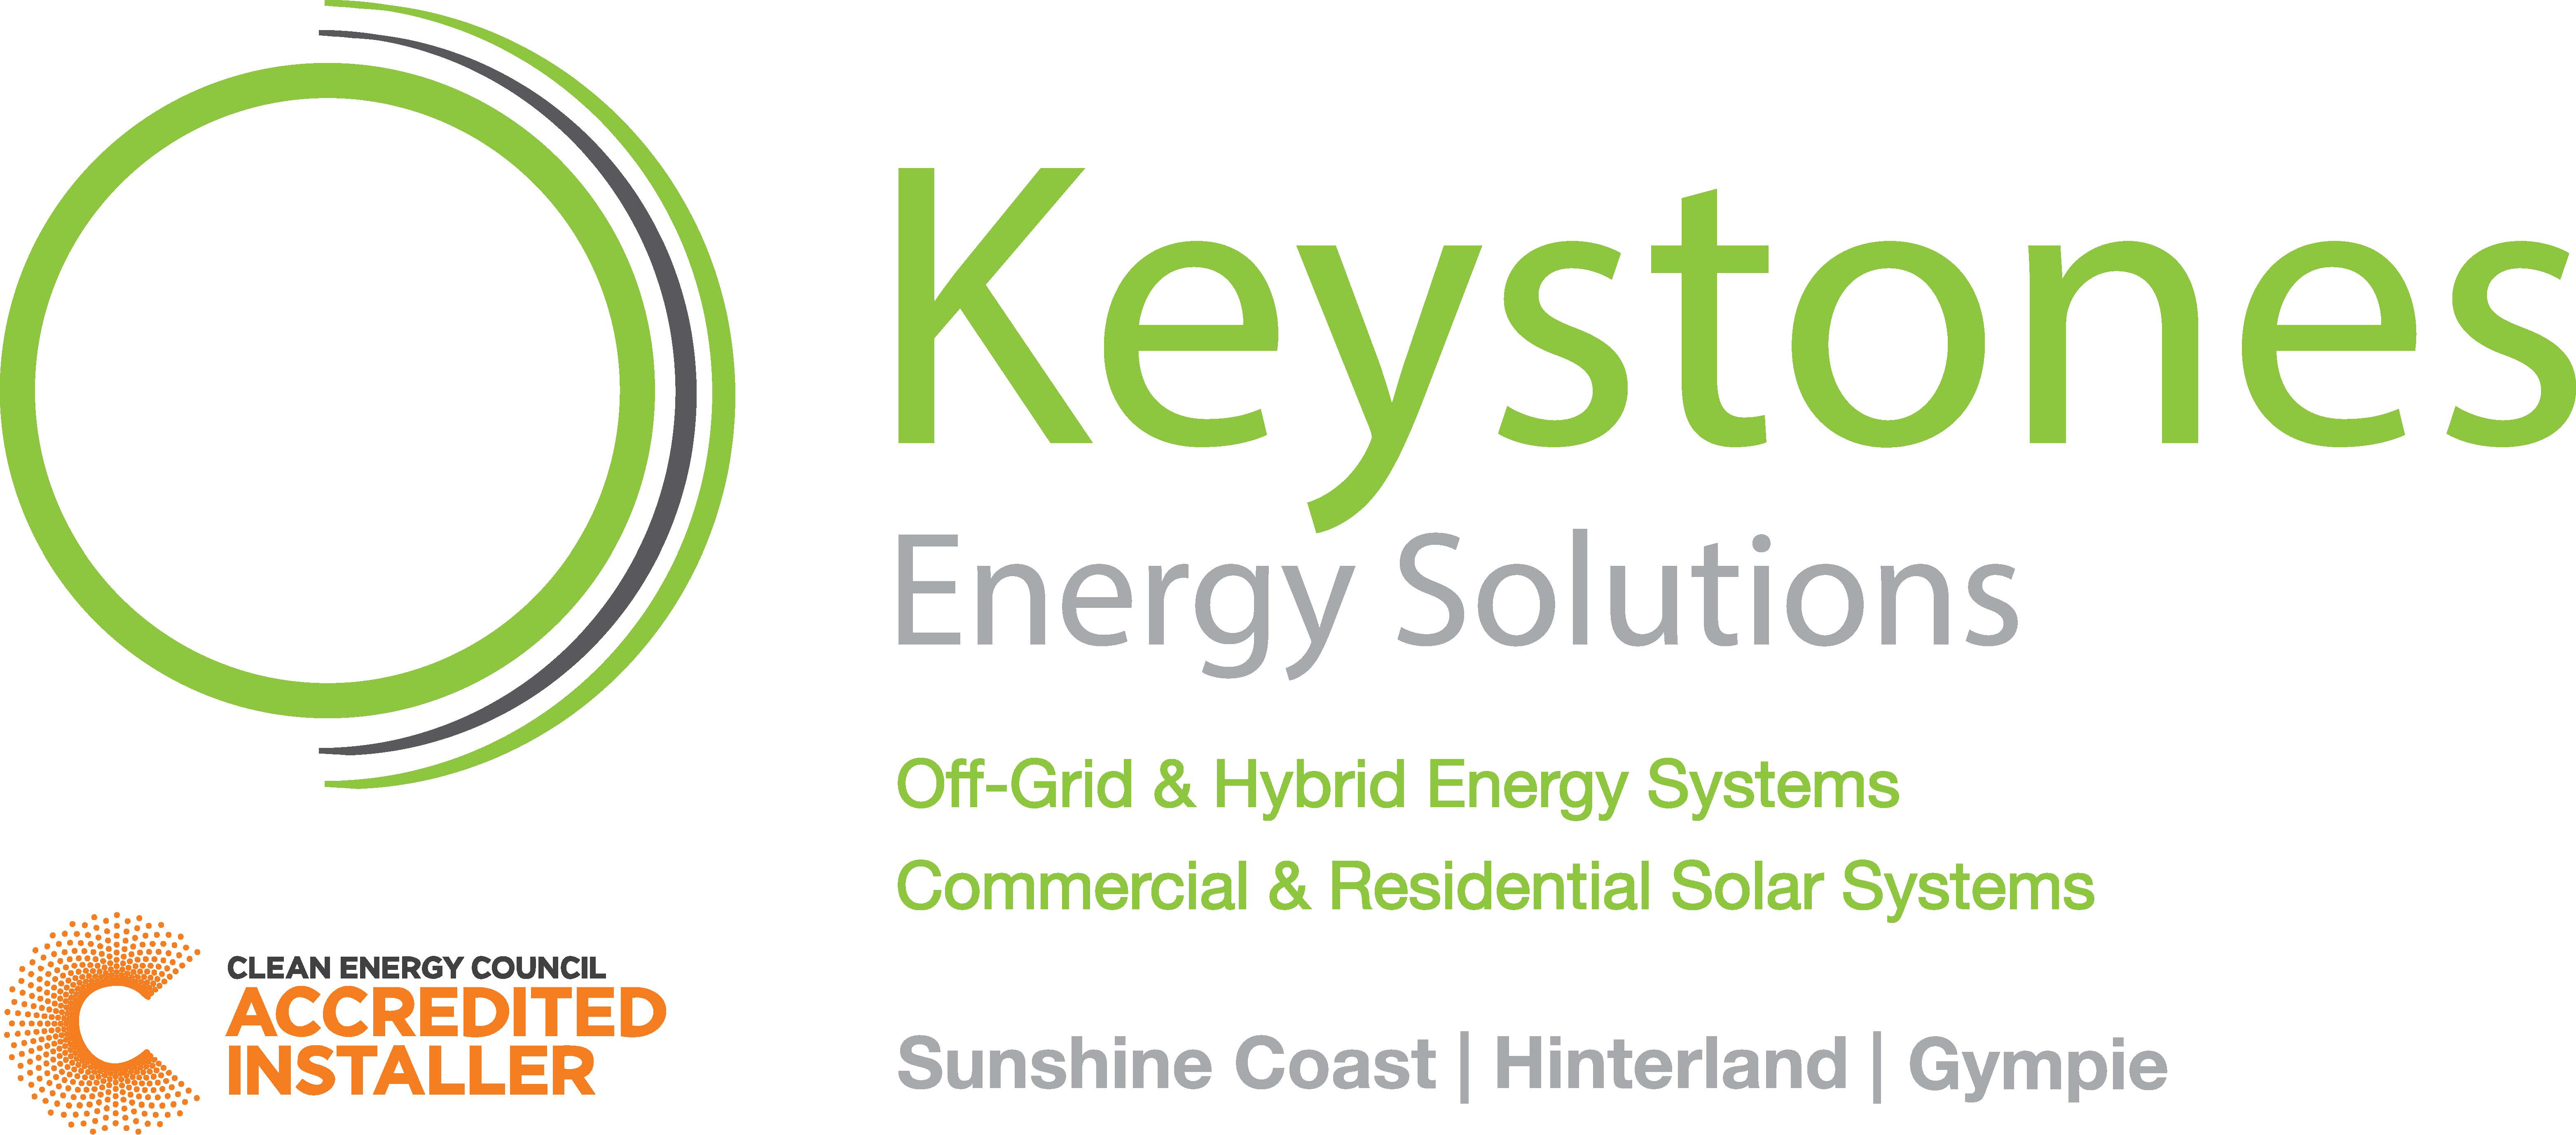 Keystones Energy Solutions